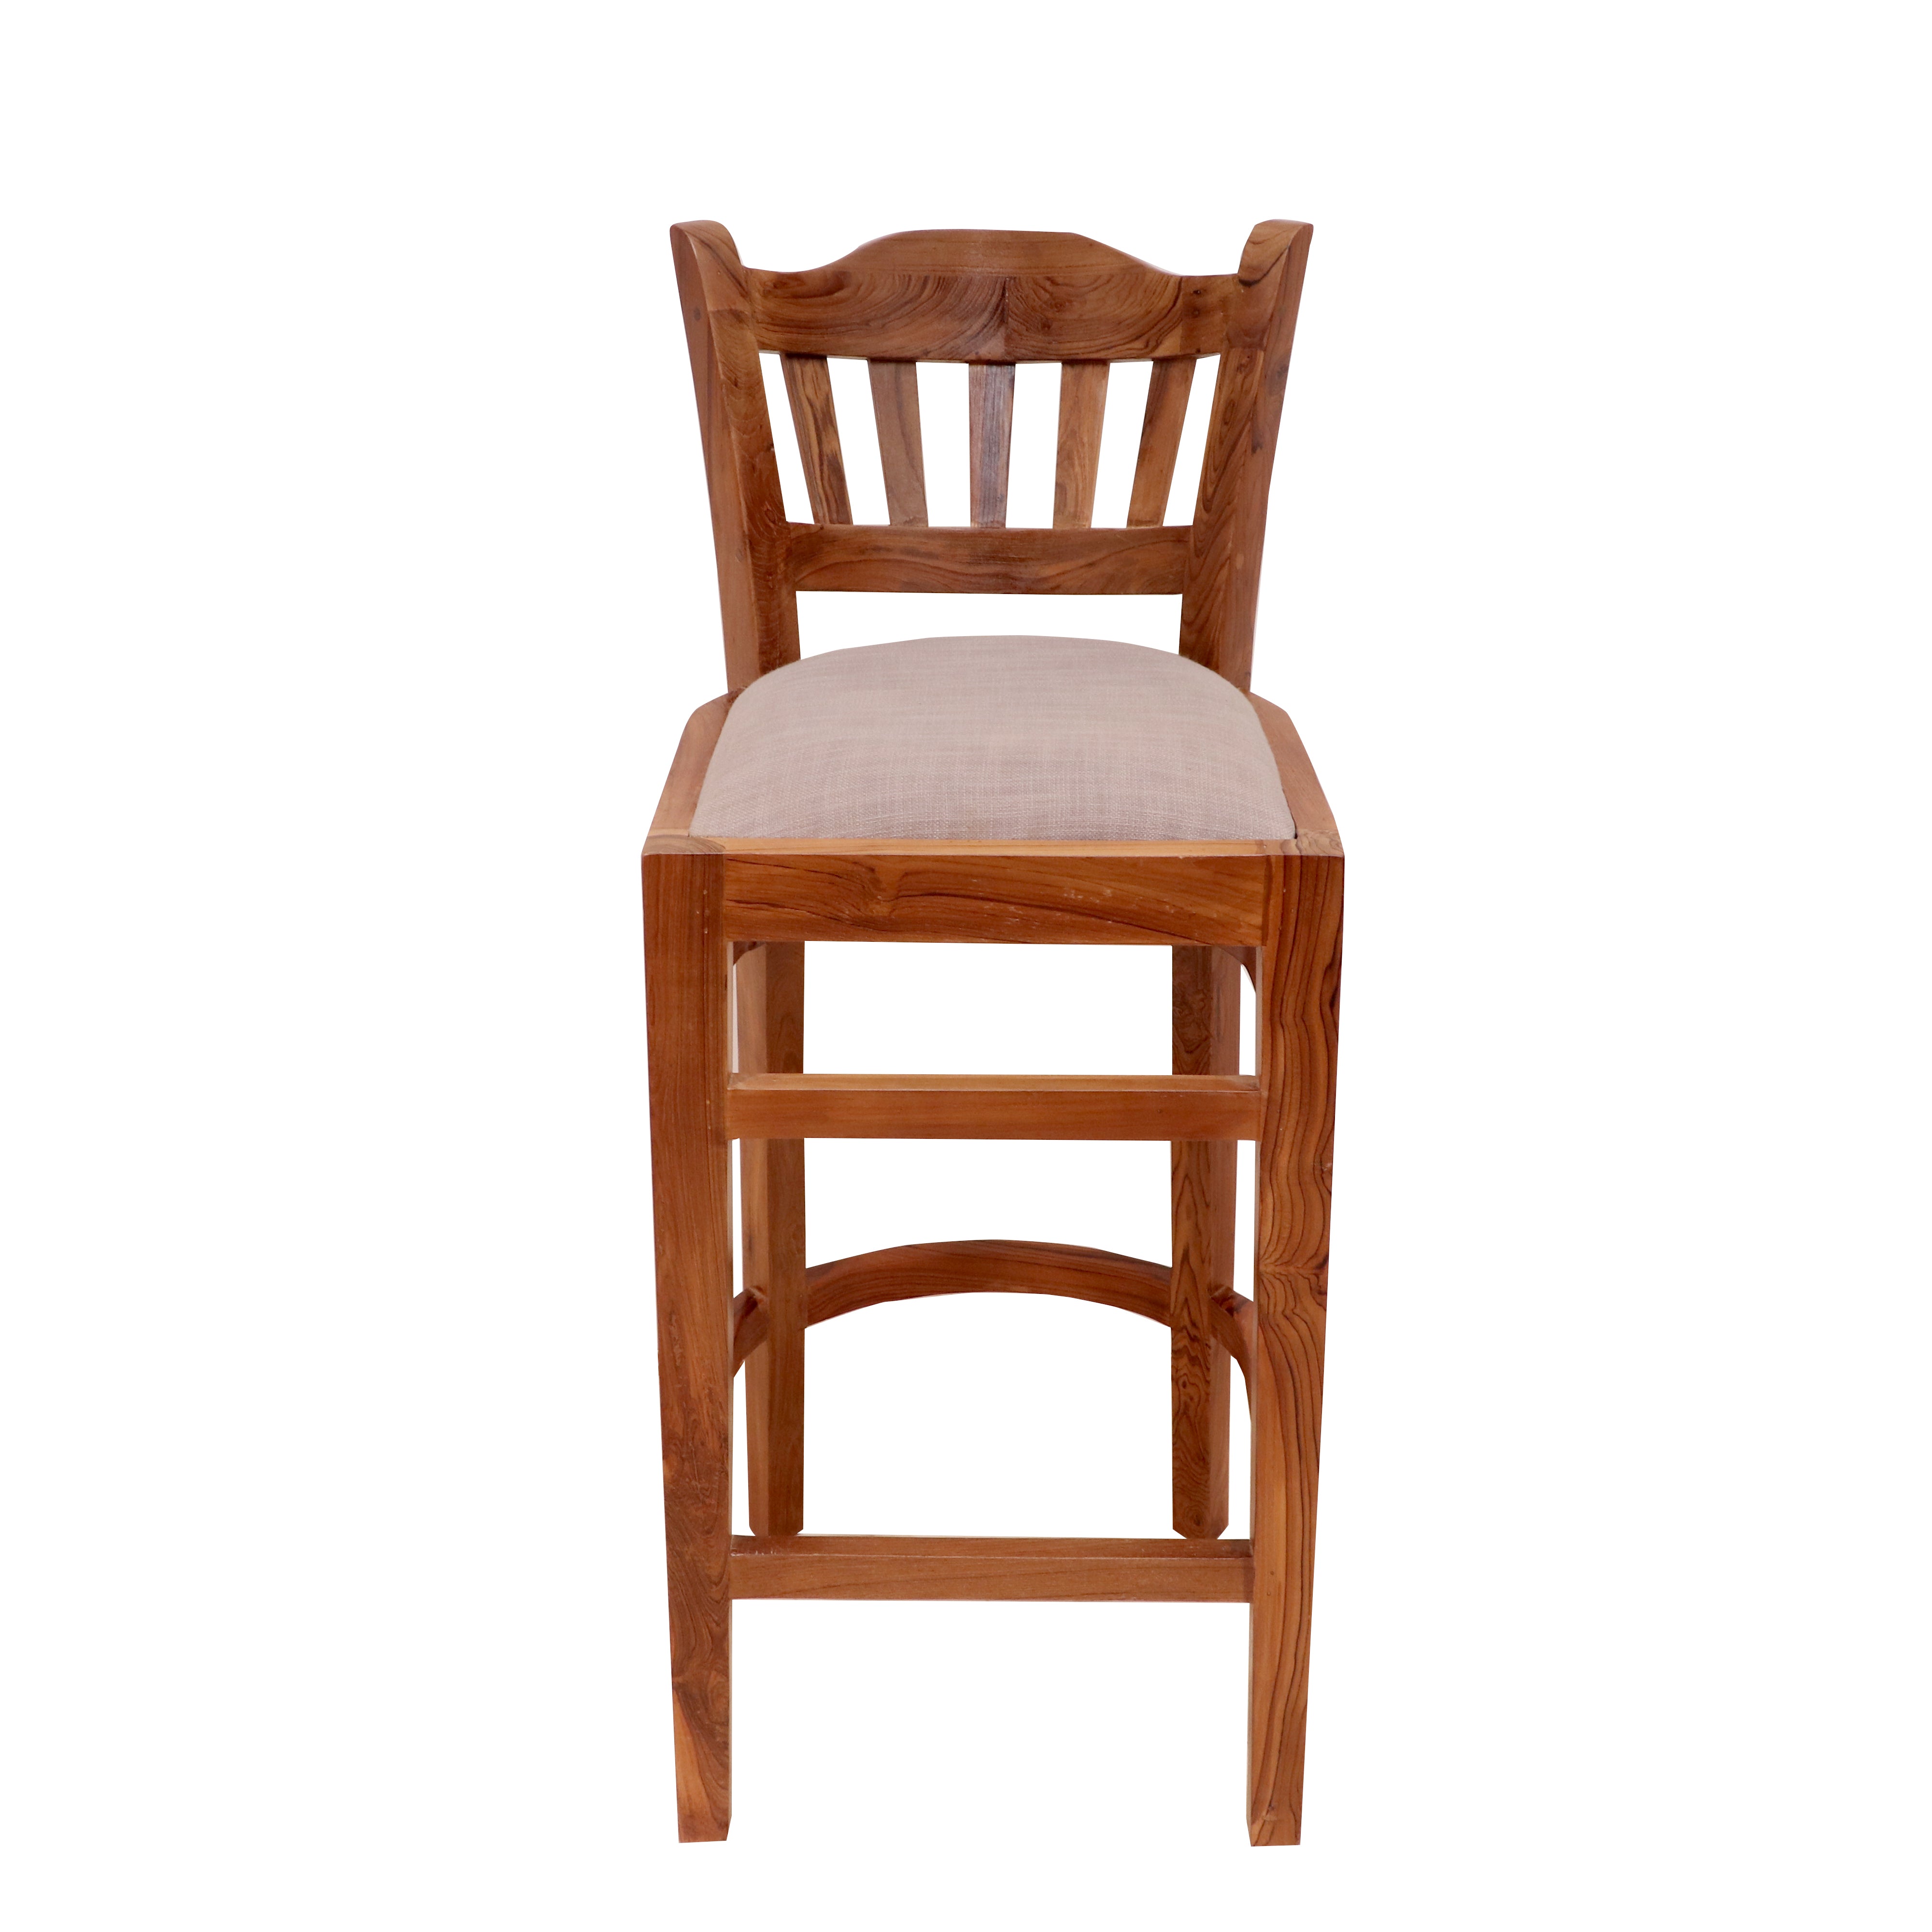 Teak wood bar height chair with curvy design Bar Chair